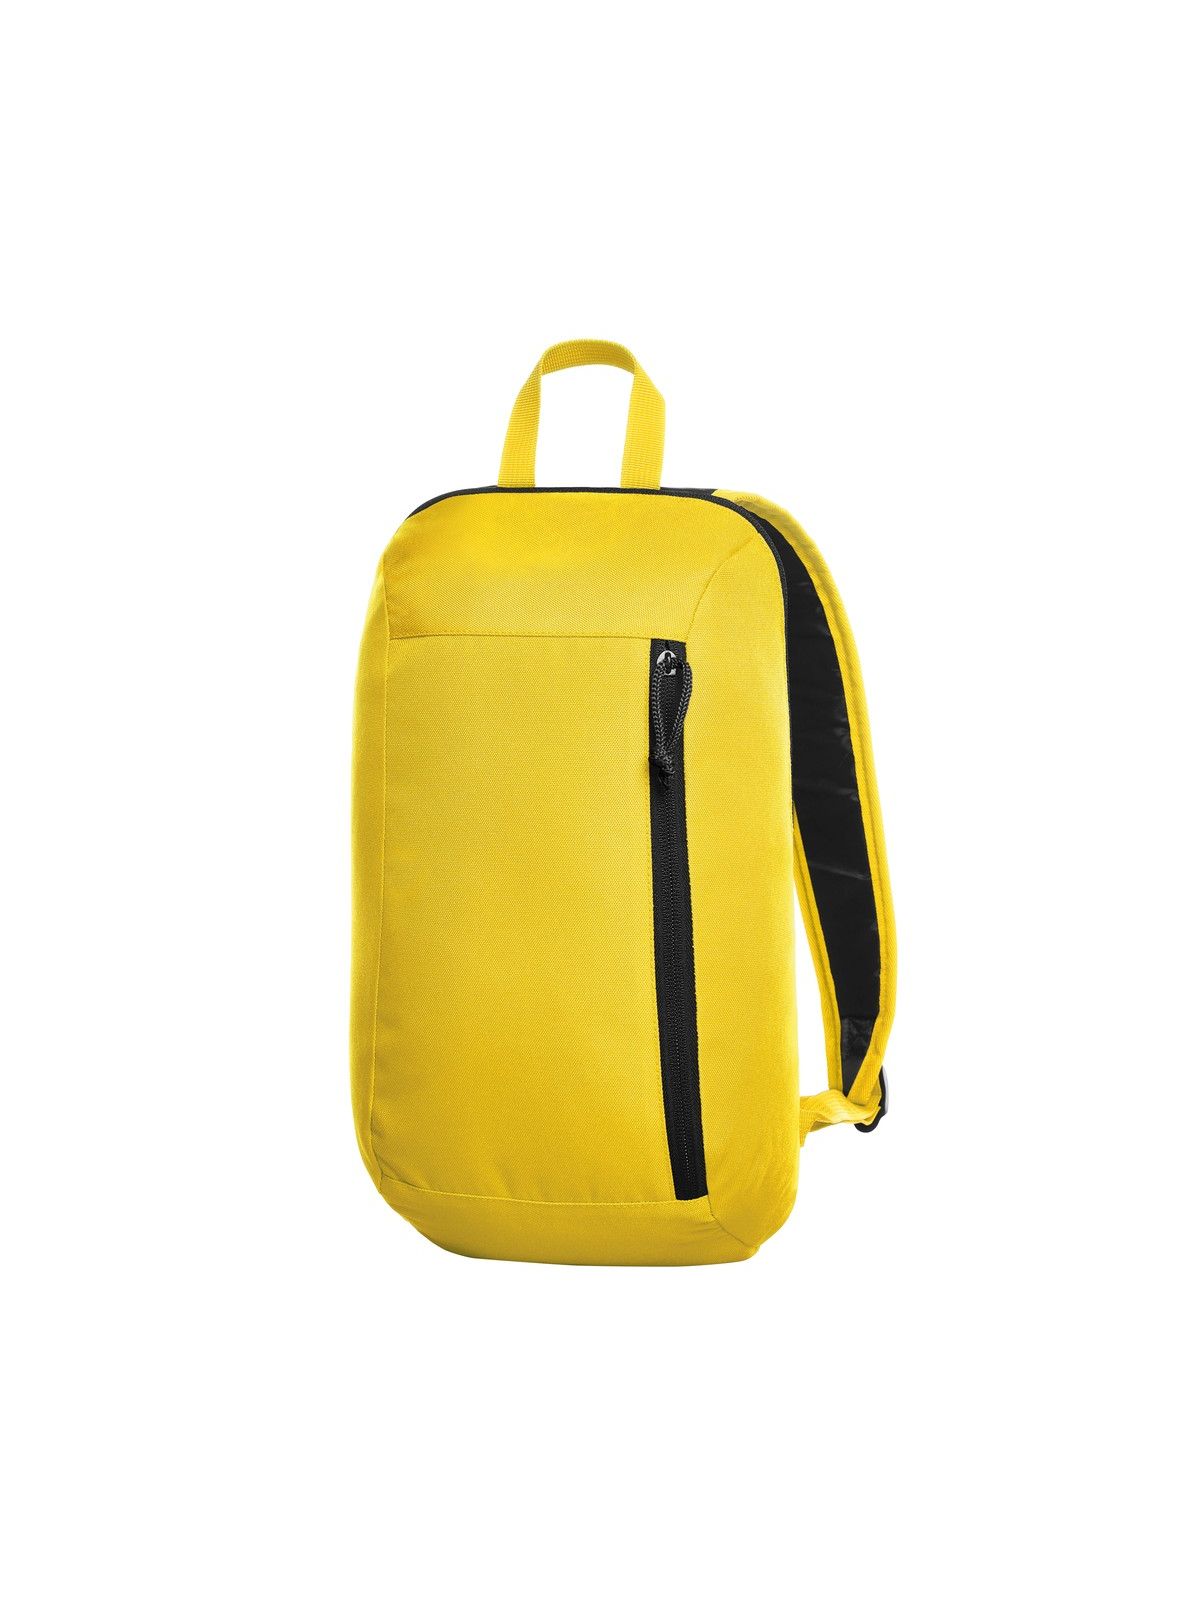 flow-backpack-yellow.webp